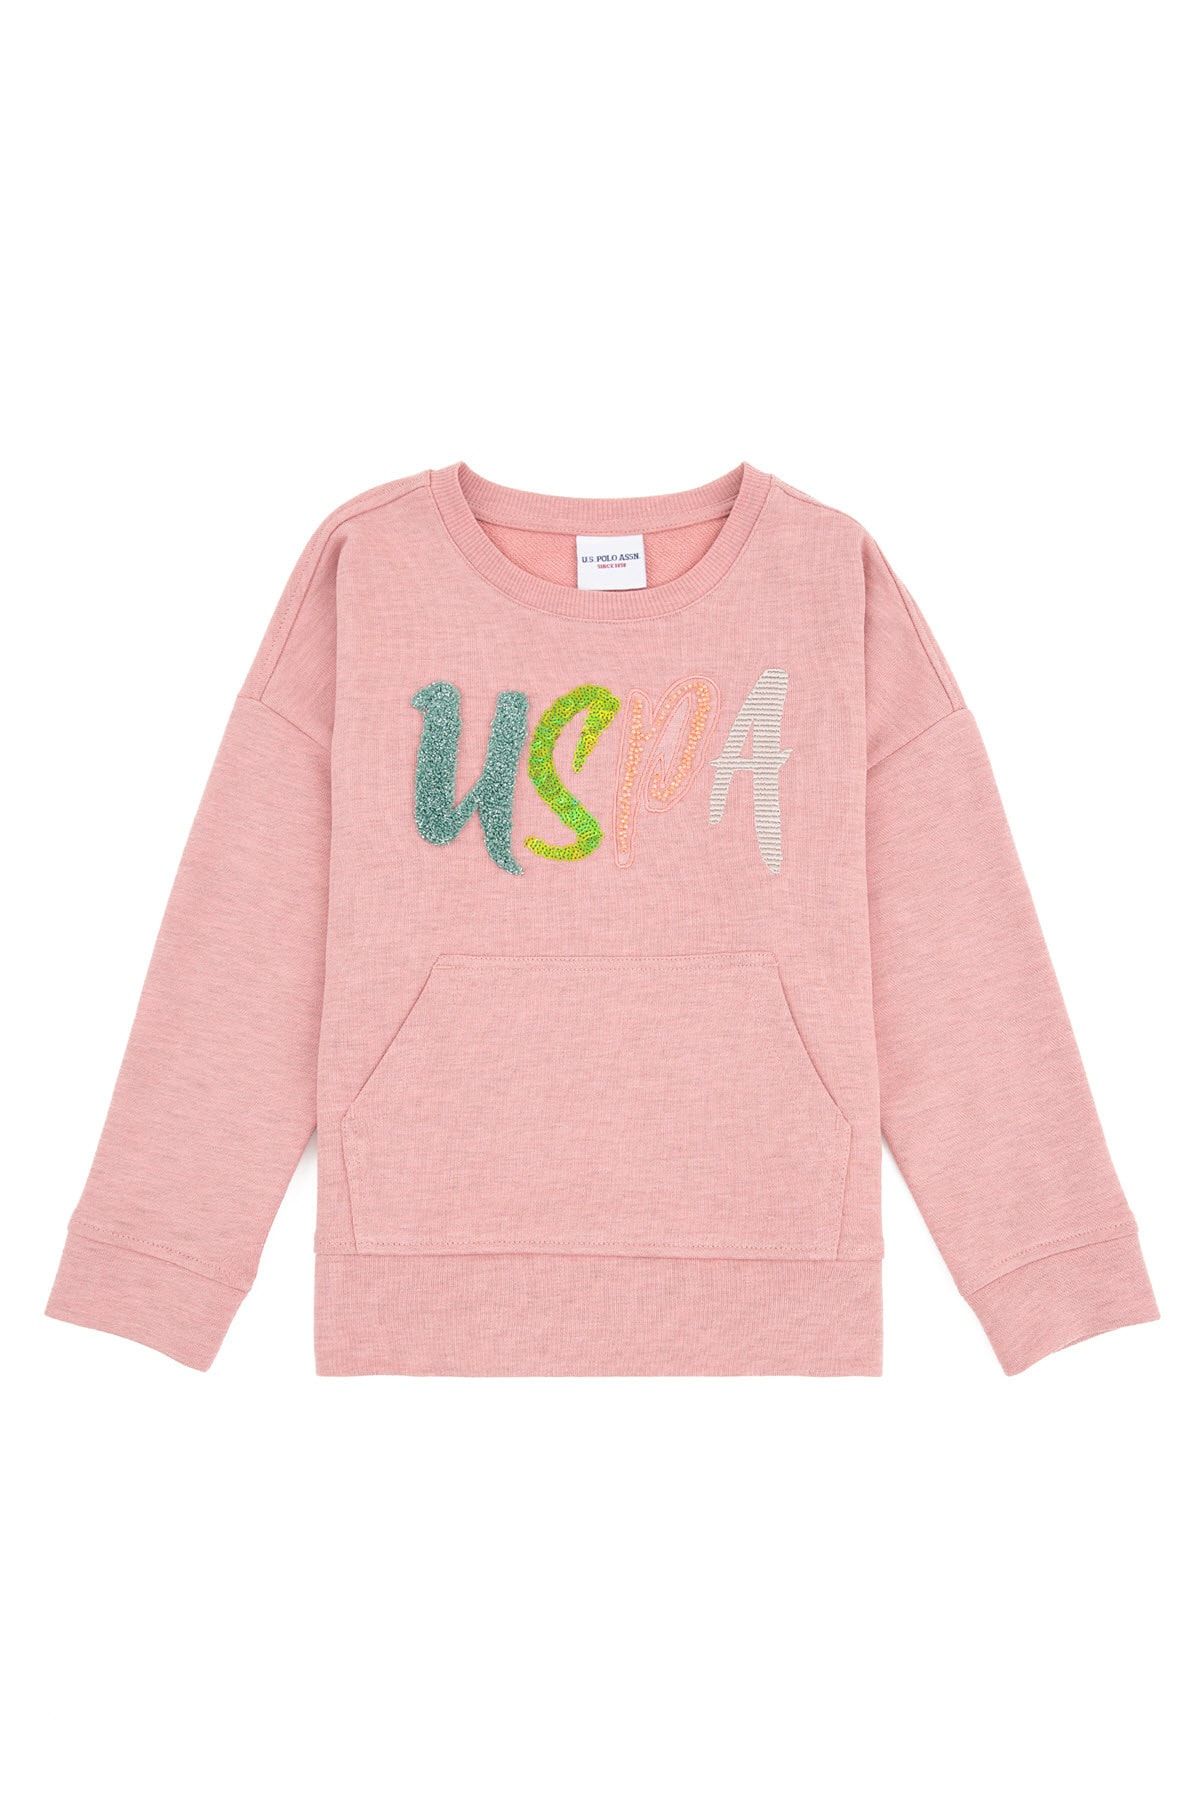 U.S. Polo Assn. Pembe Kız Çocuk Sweatshirt